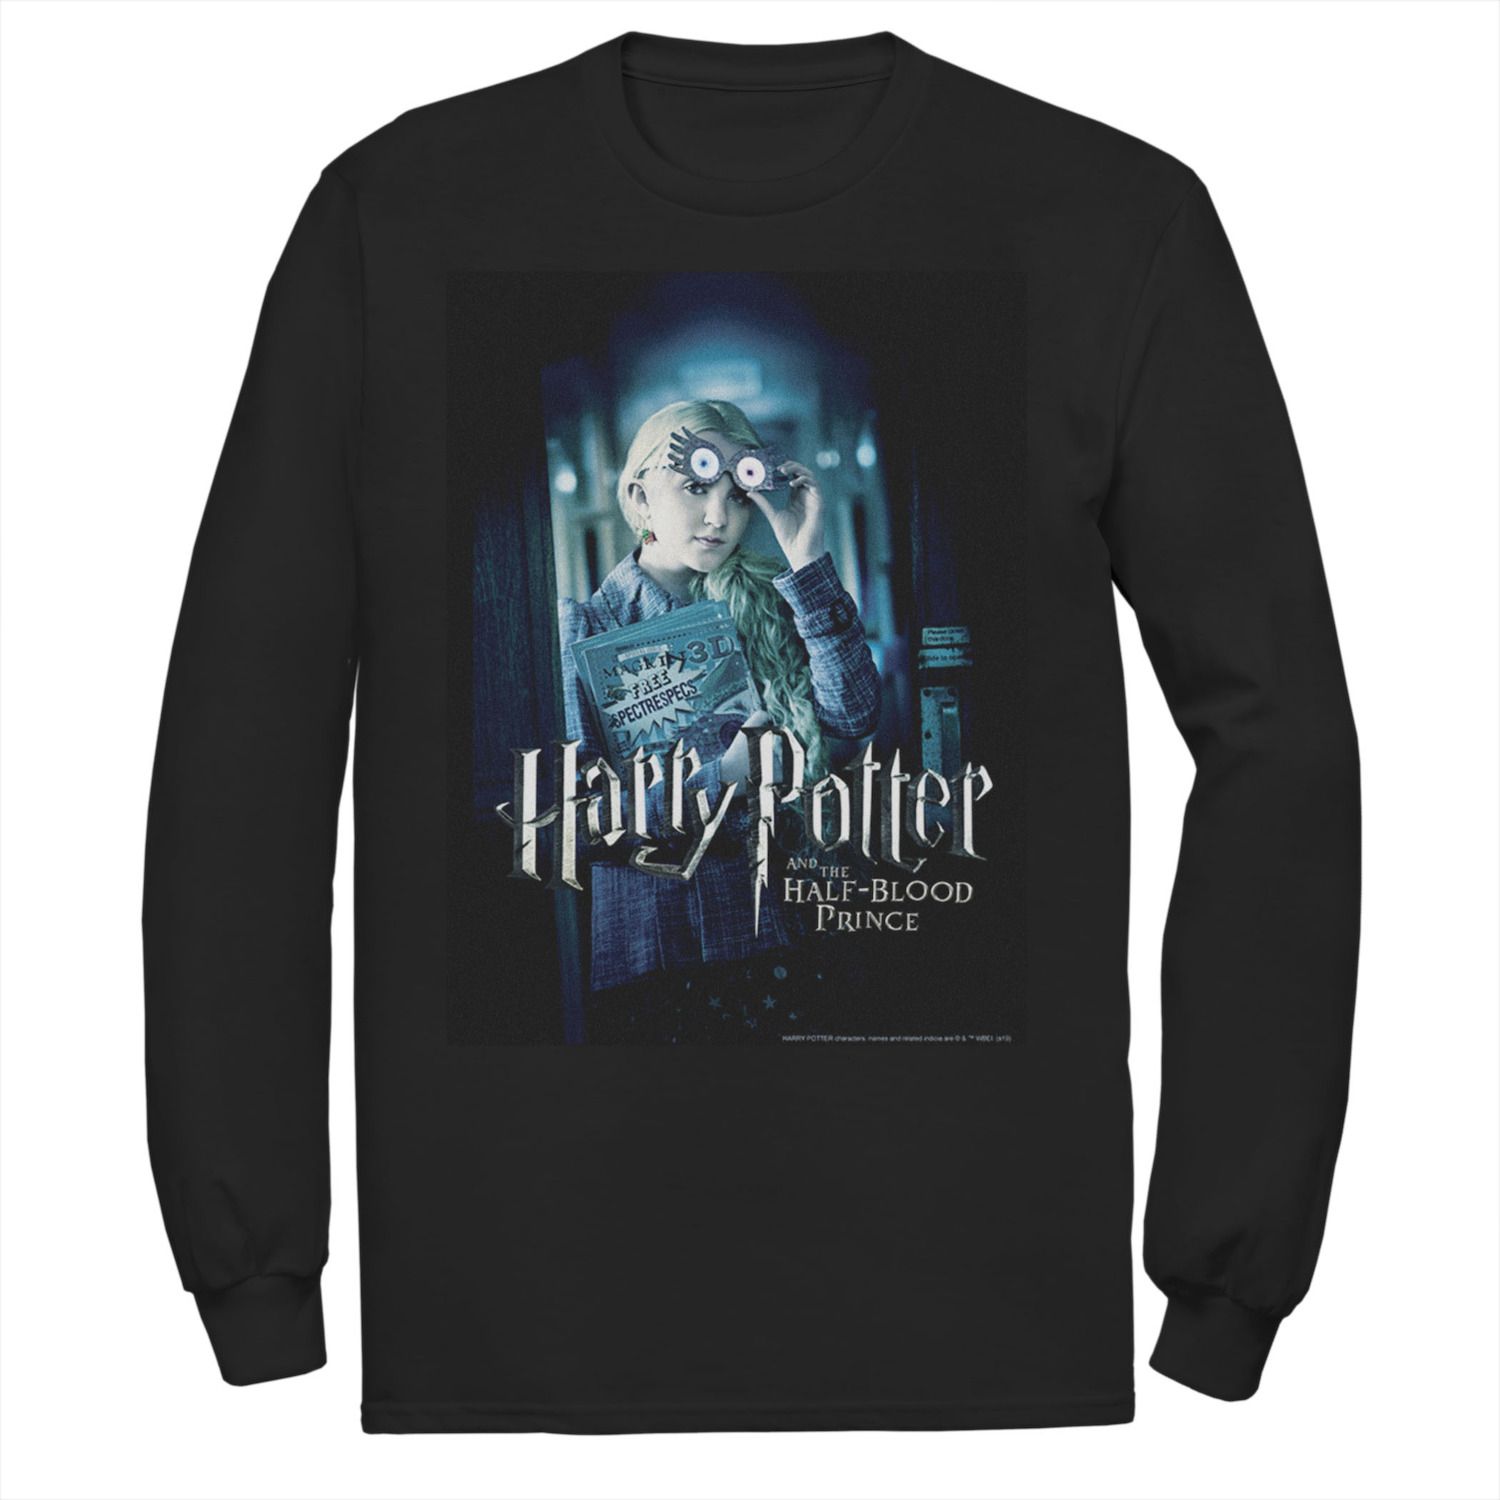 Image for Harry Potter Men's Half-Blood Prince Luna Lovegood Poster Long Sleeve Graphic Tee at Kohl's.